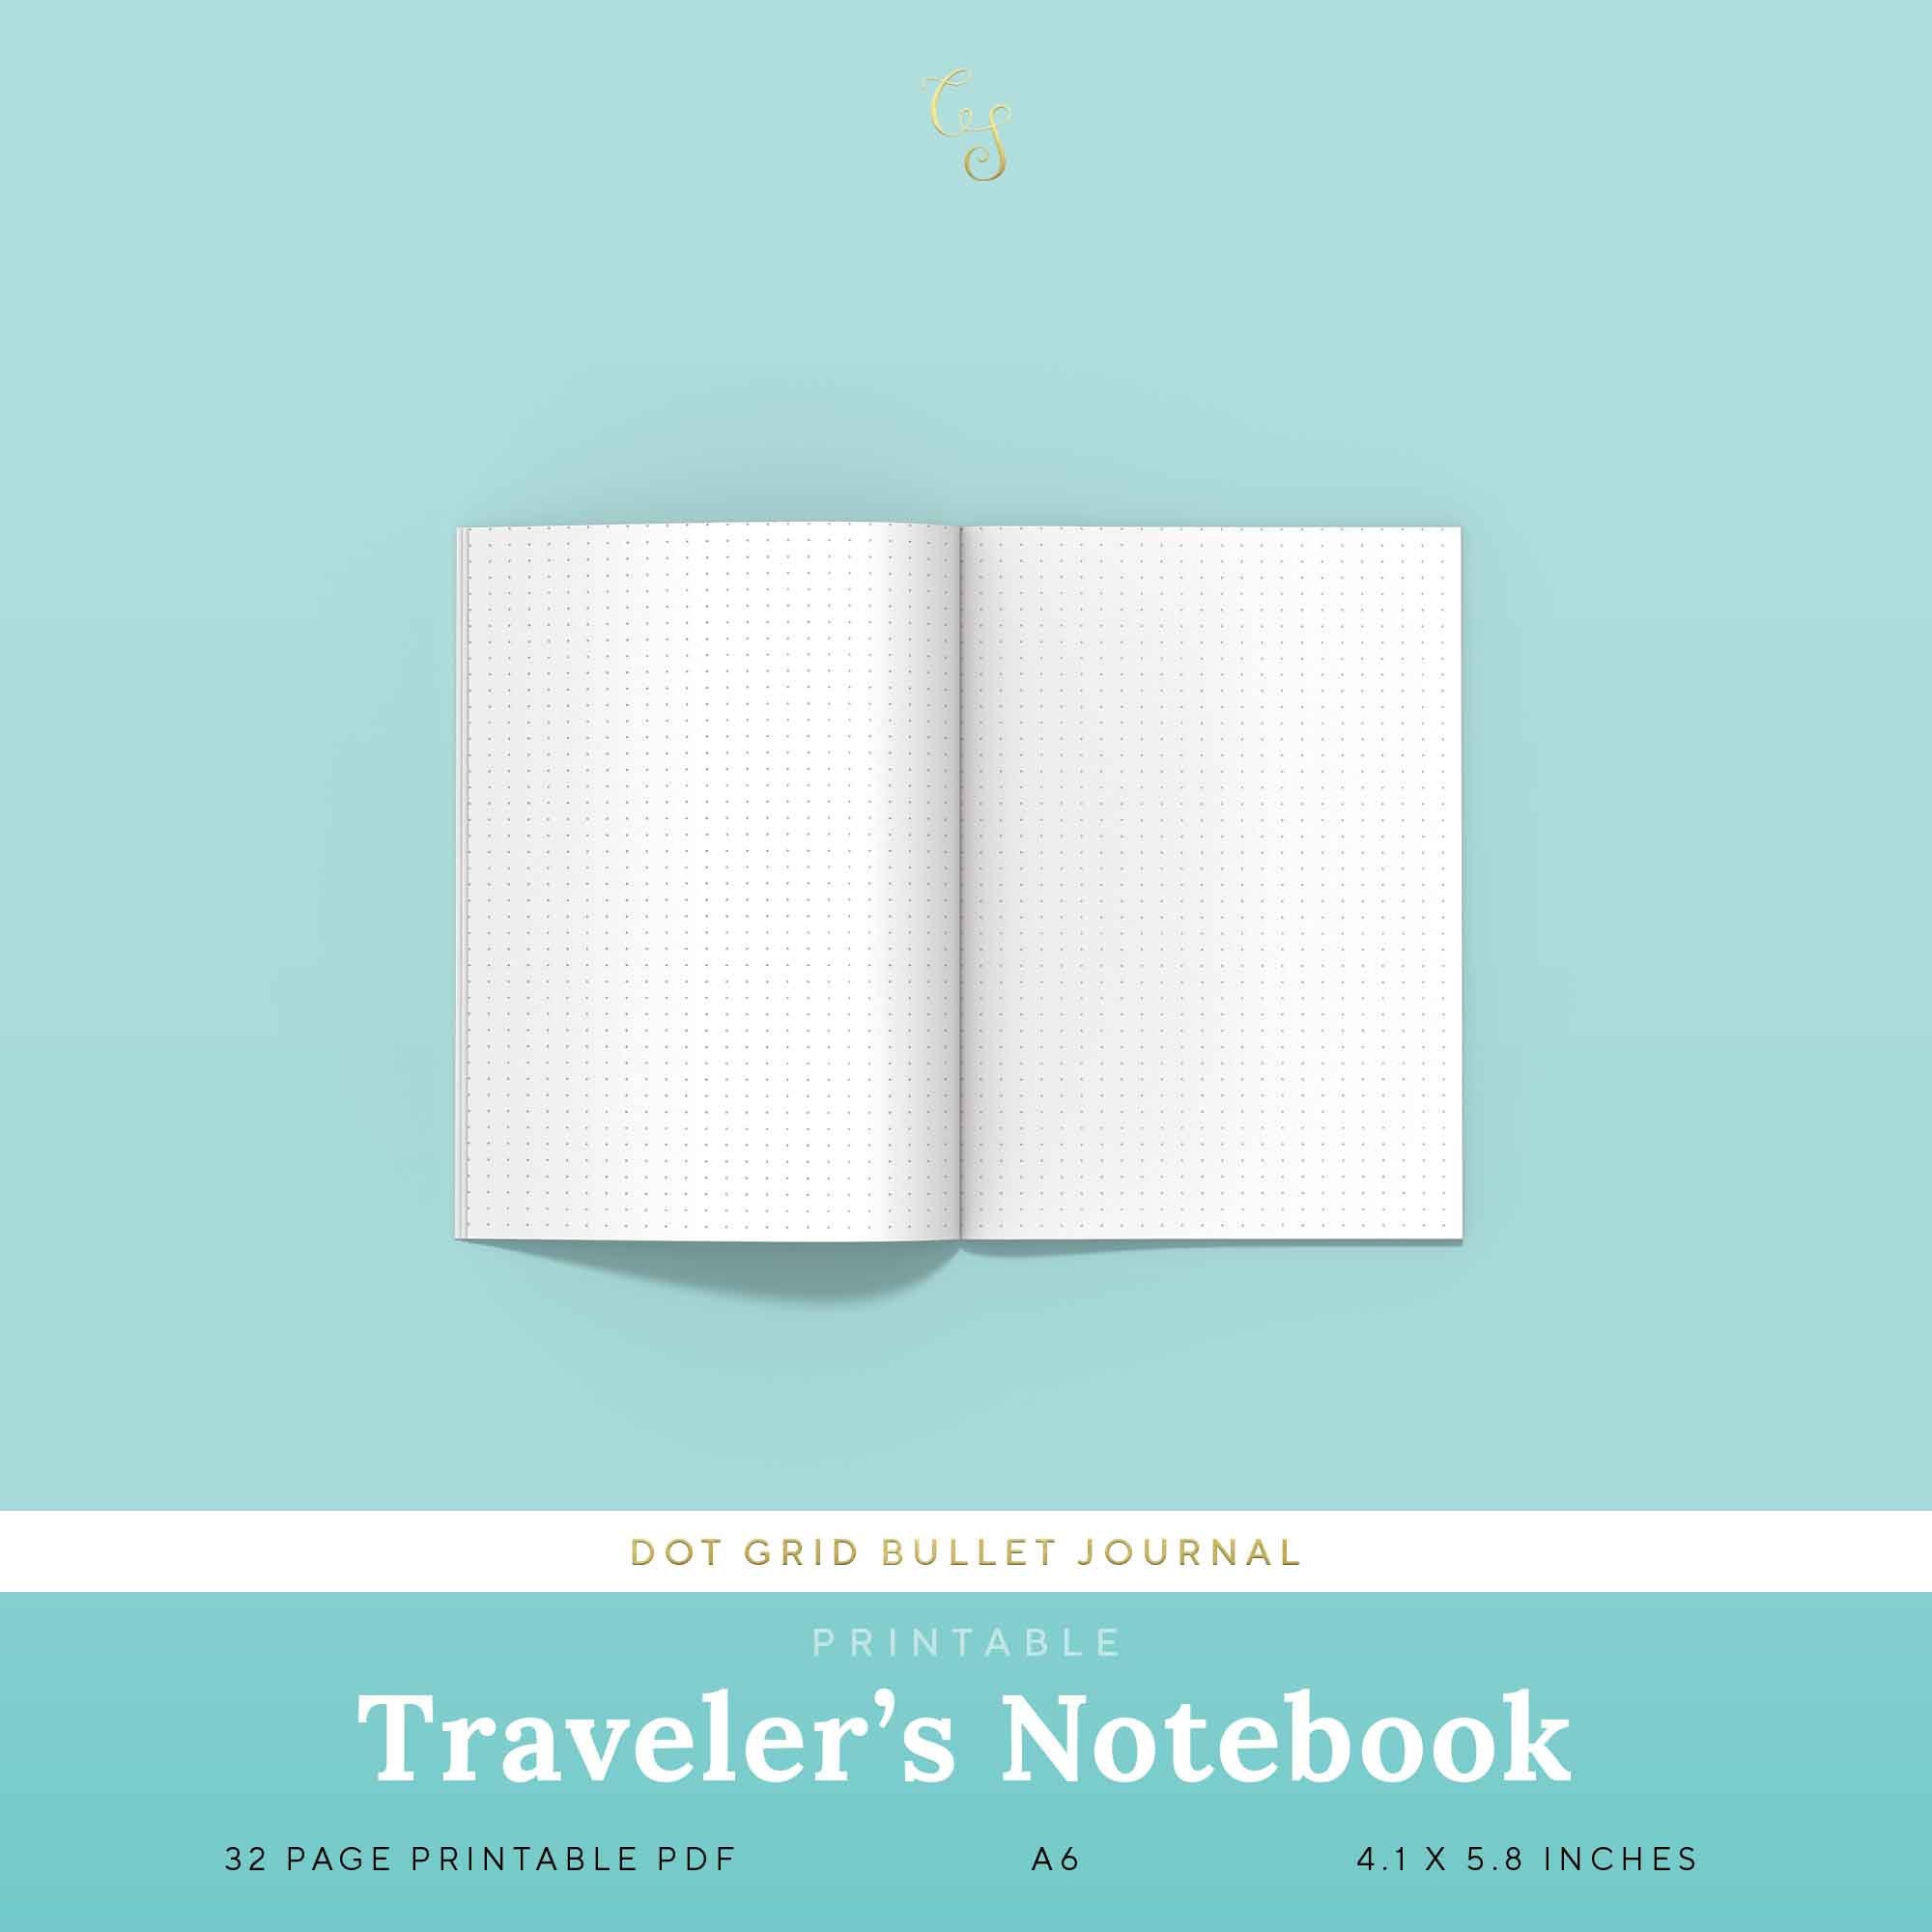 TN Booklets - Dot Grid - Bullet Journal 